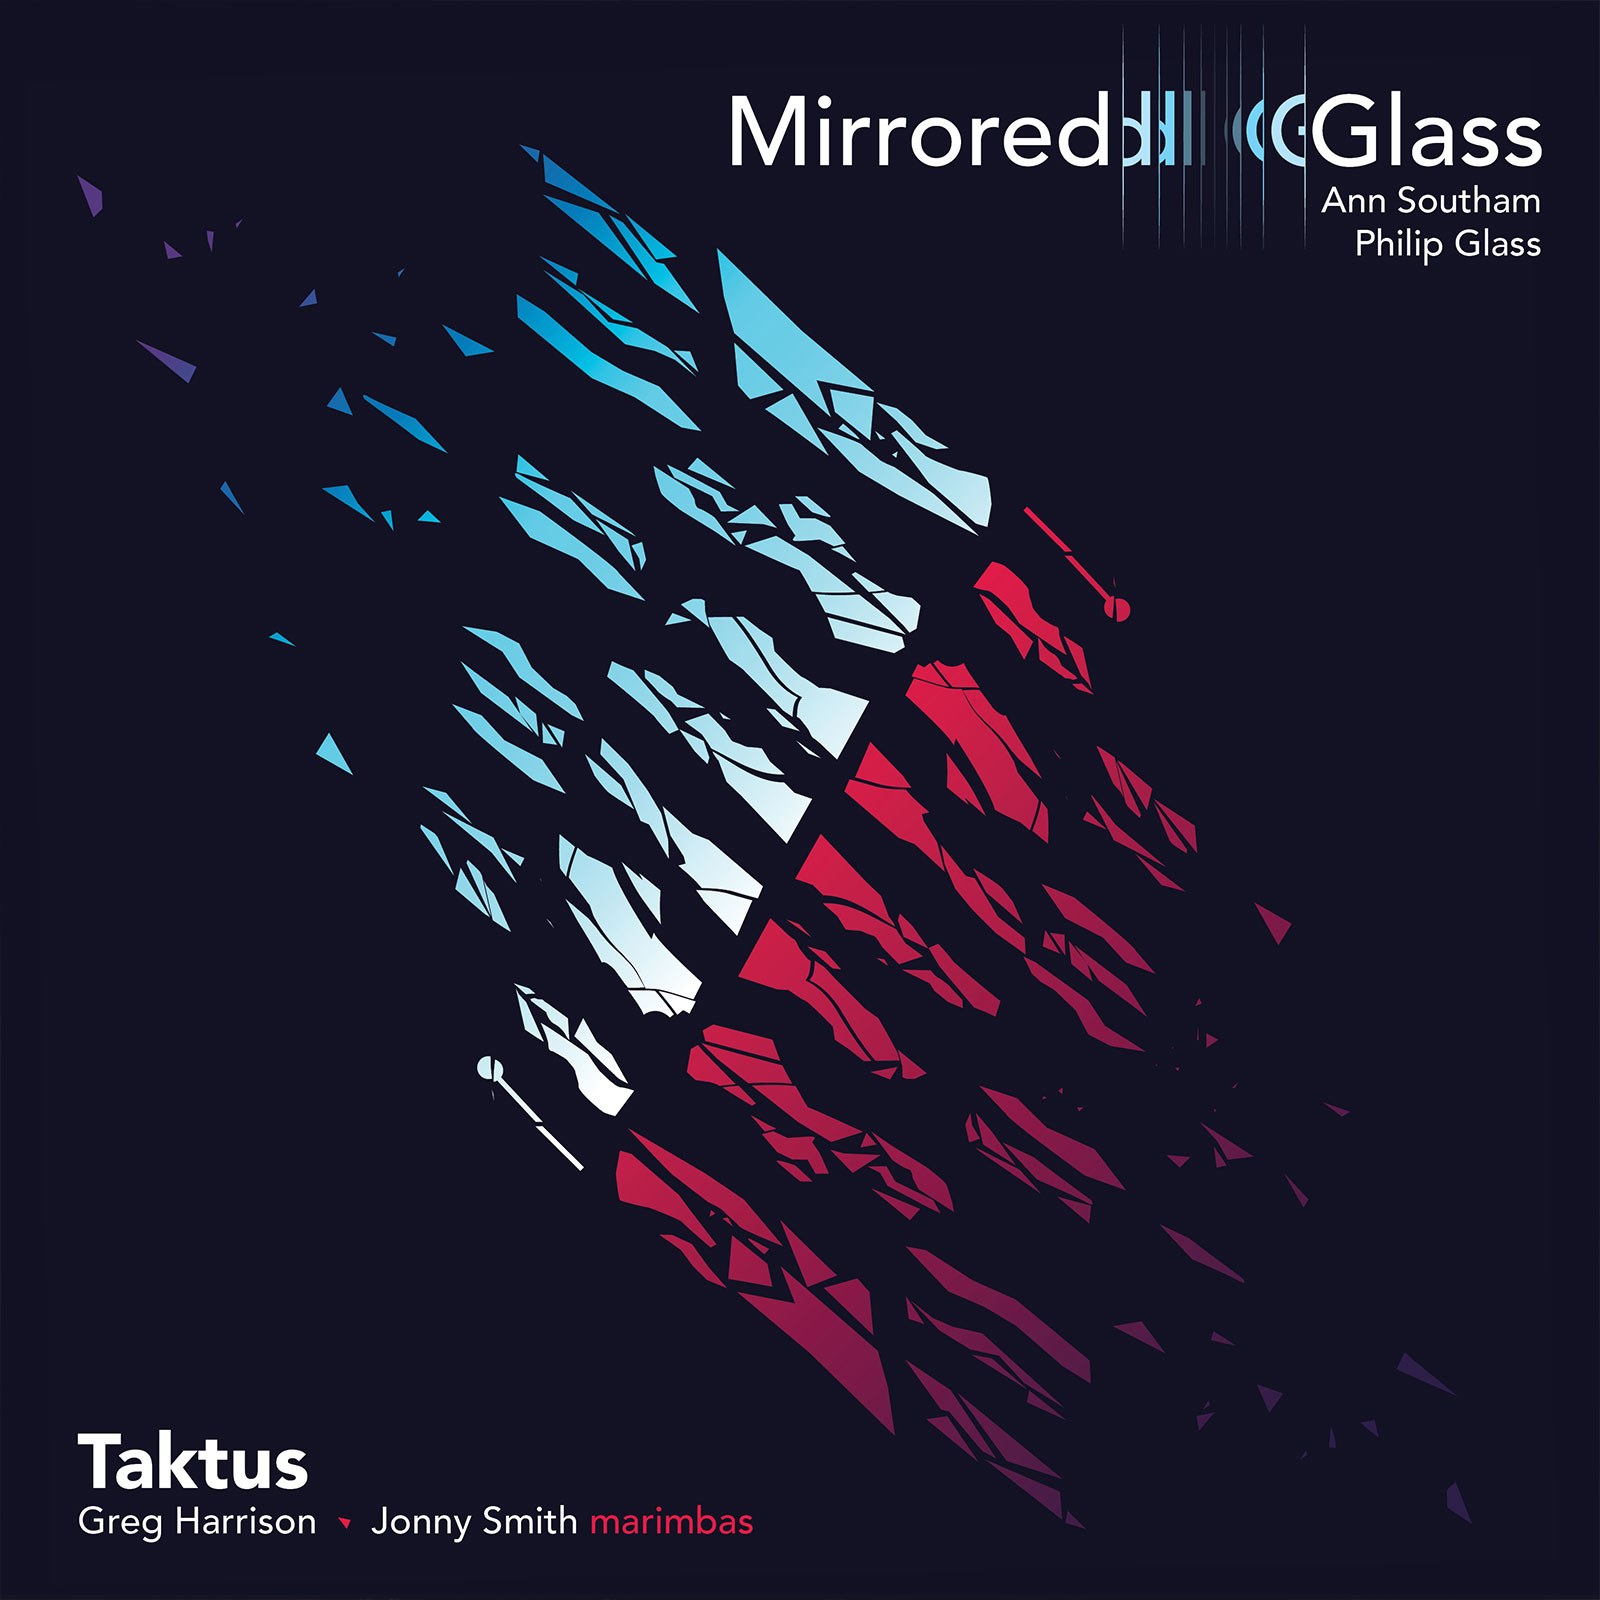 Mirrored Glass - Taktus - Album Cover